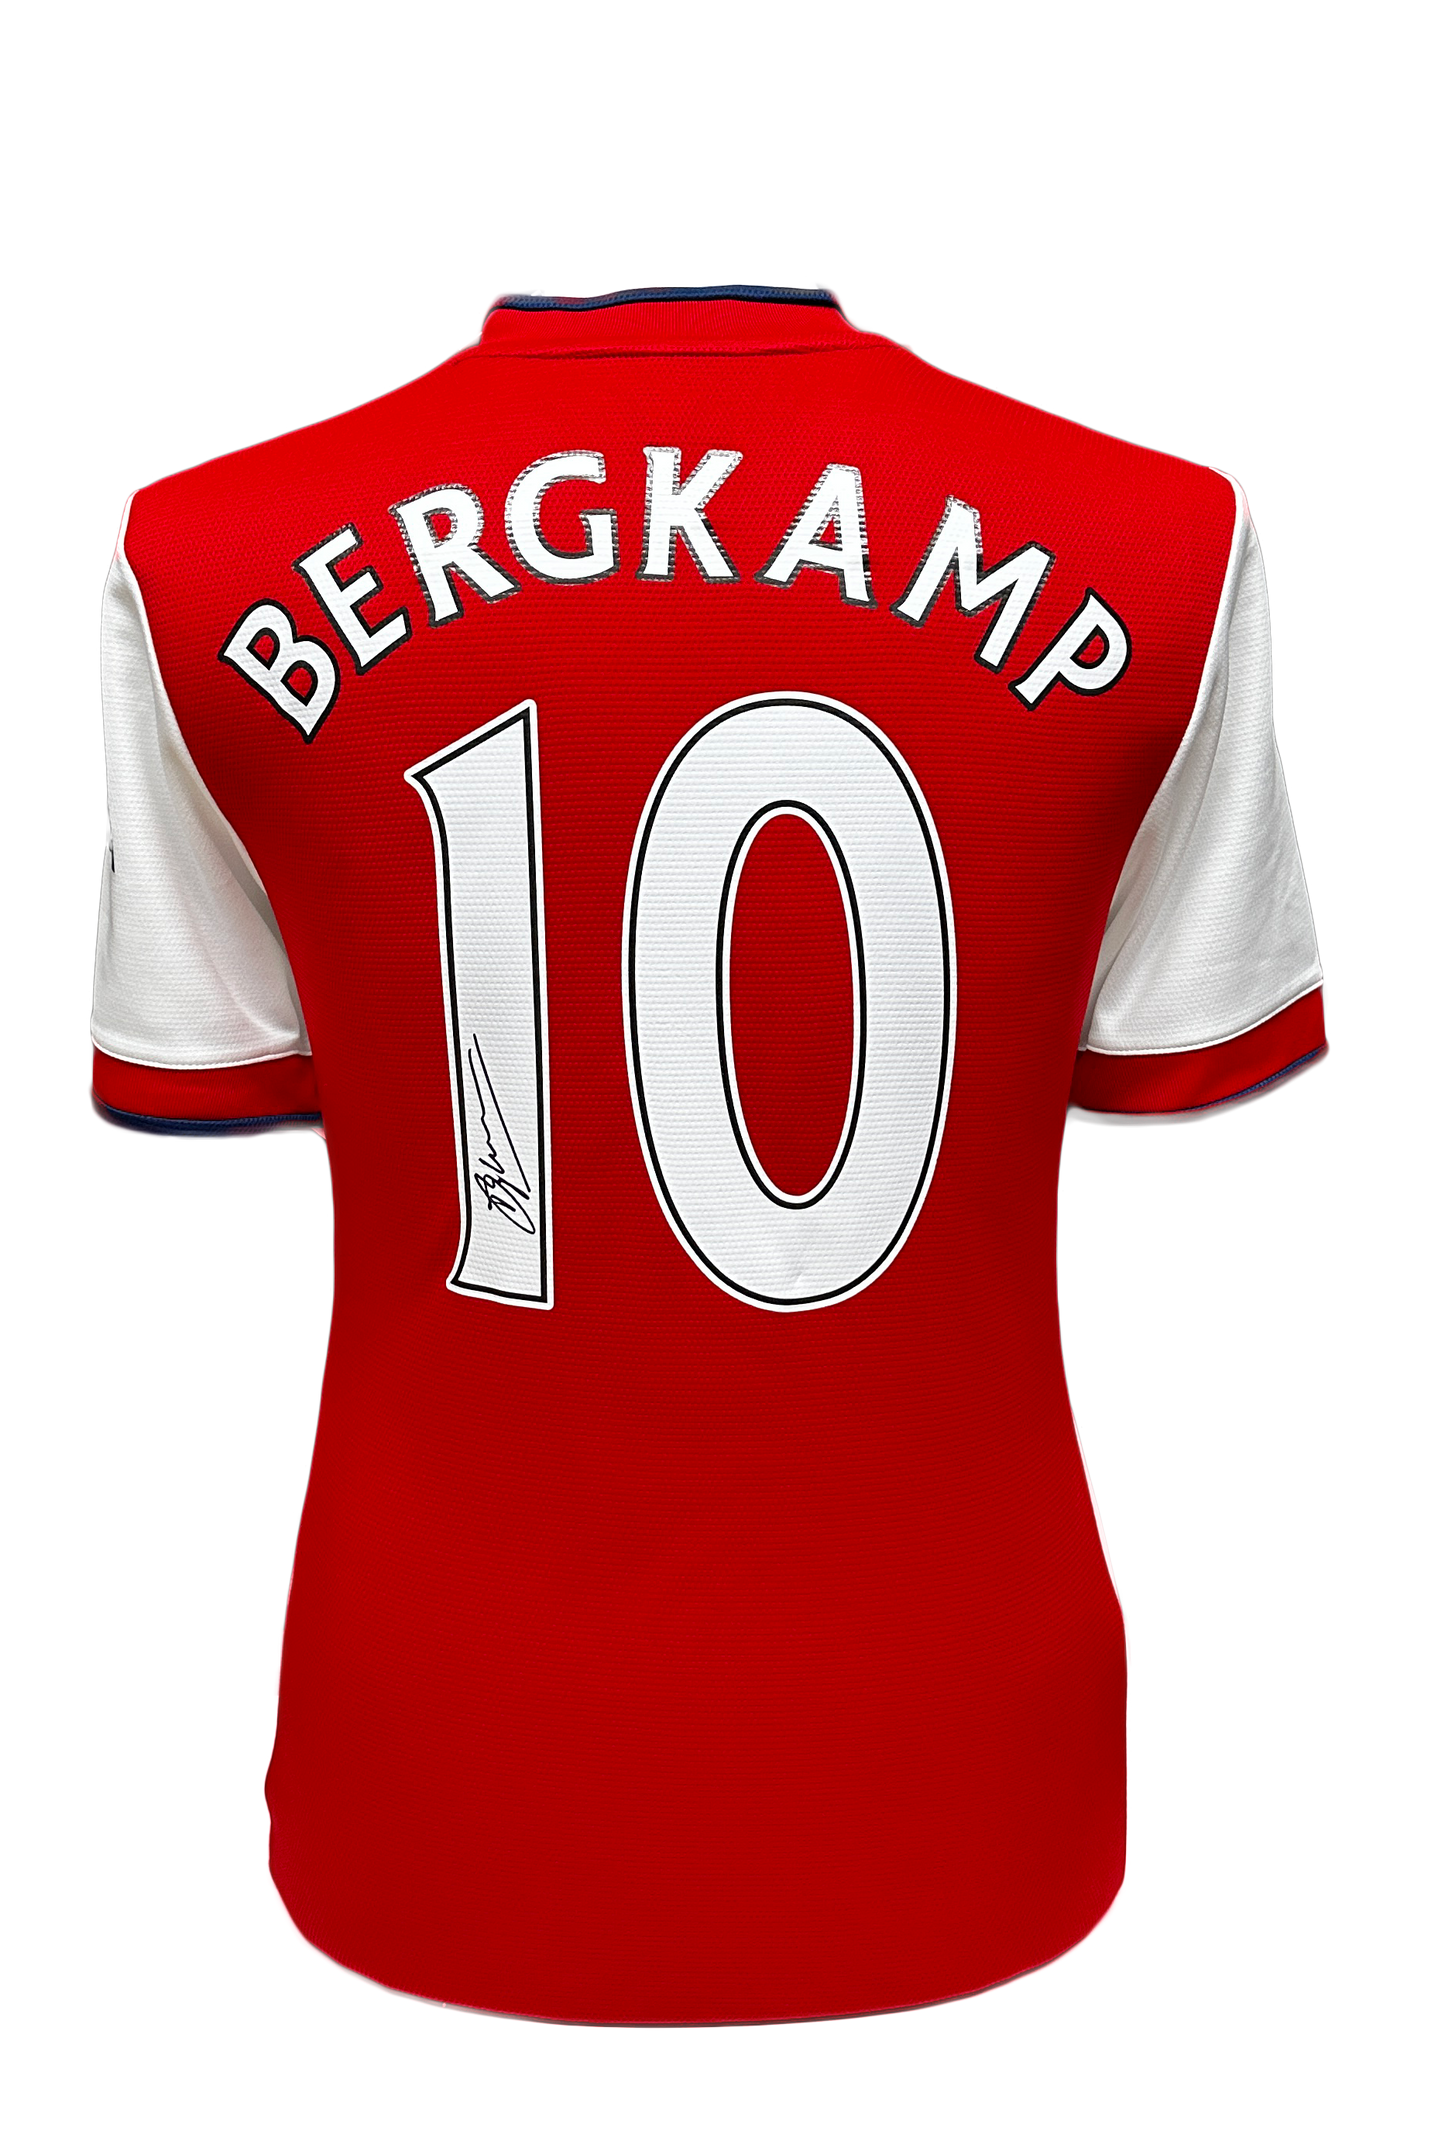 Dennis Bergkamp Signed Arsenal Shirt